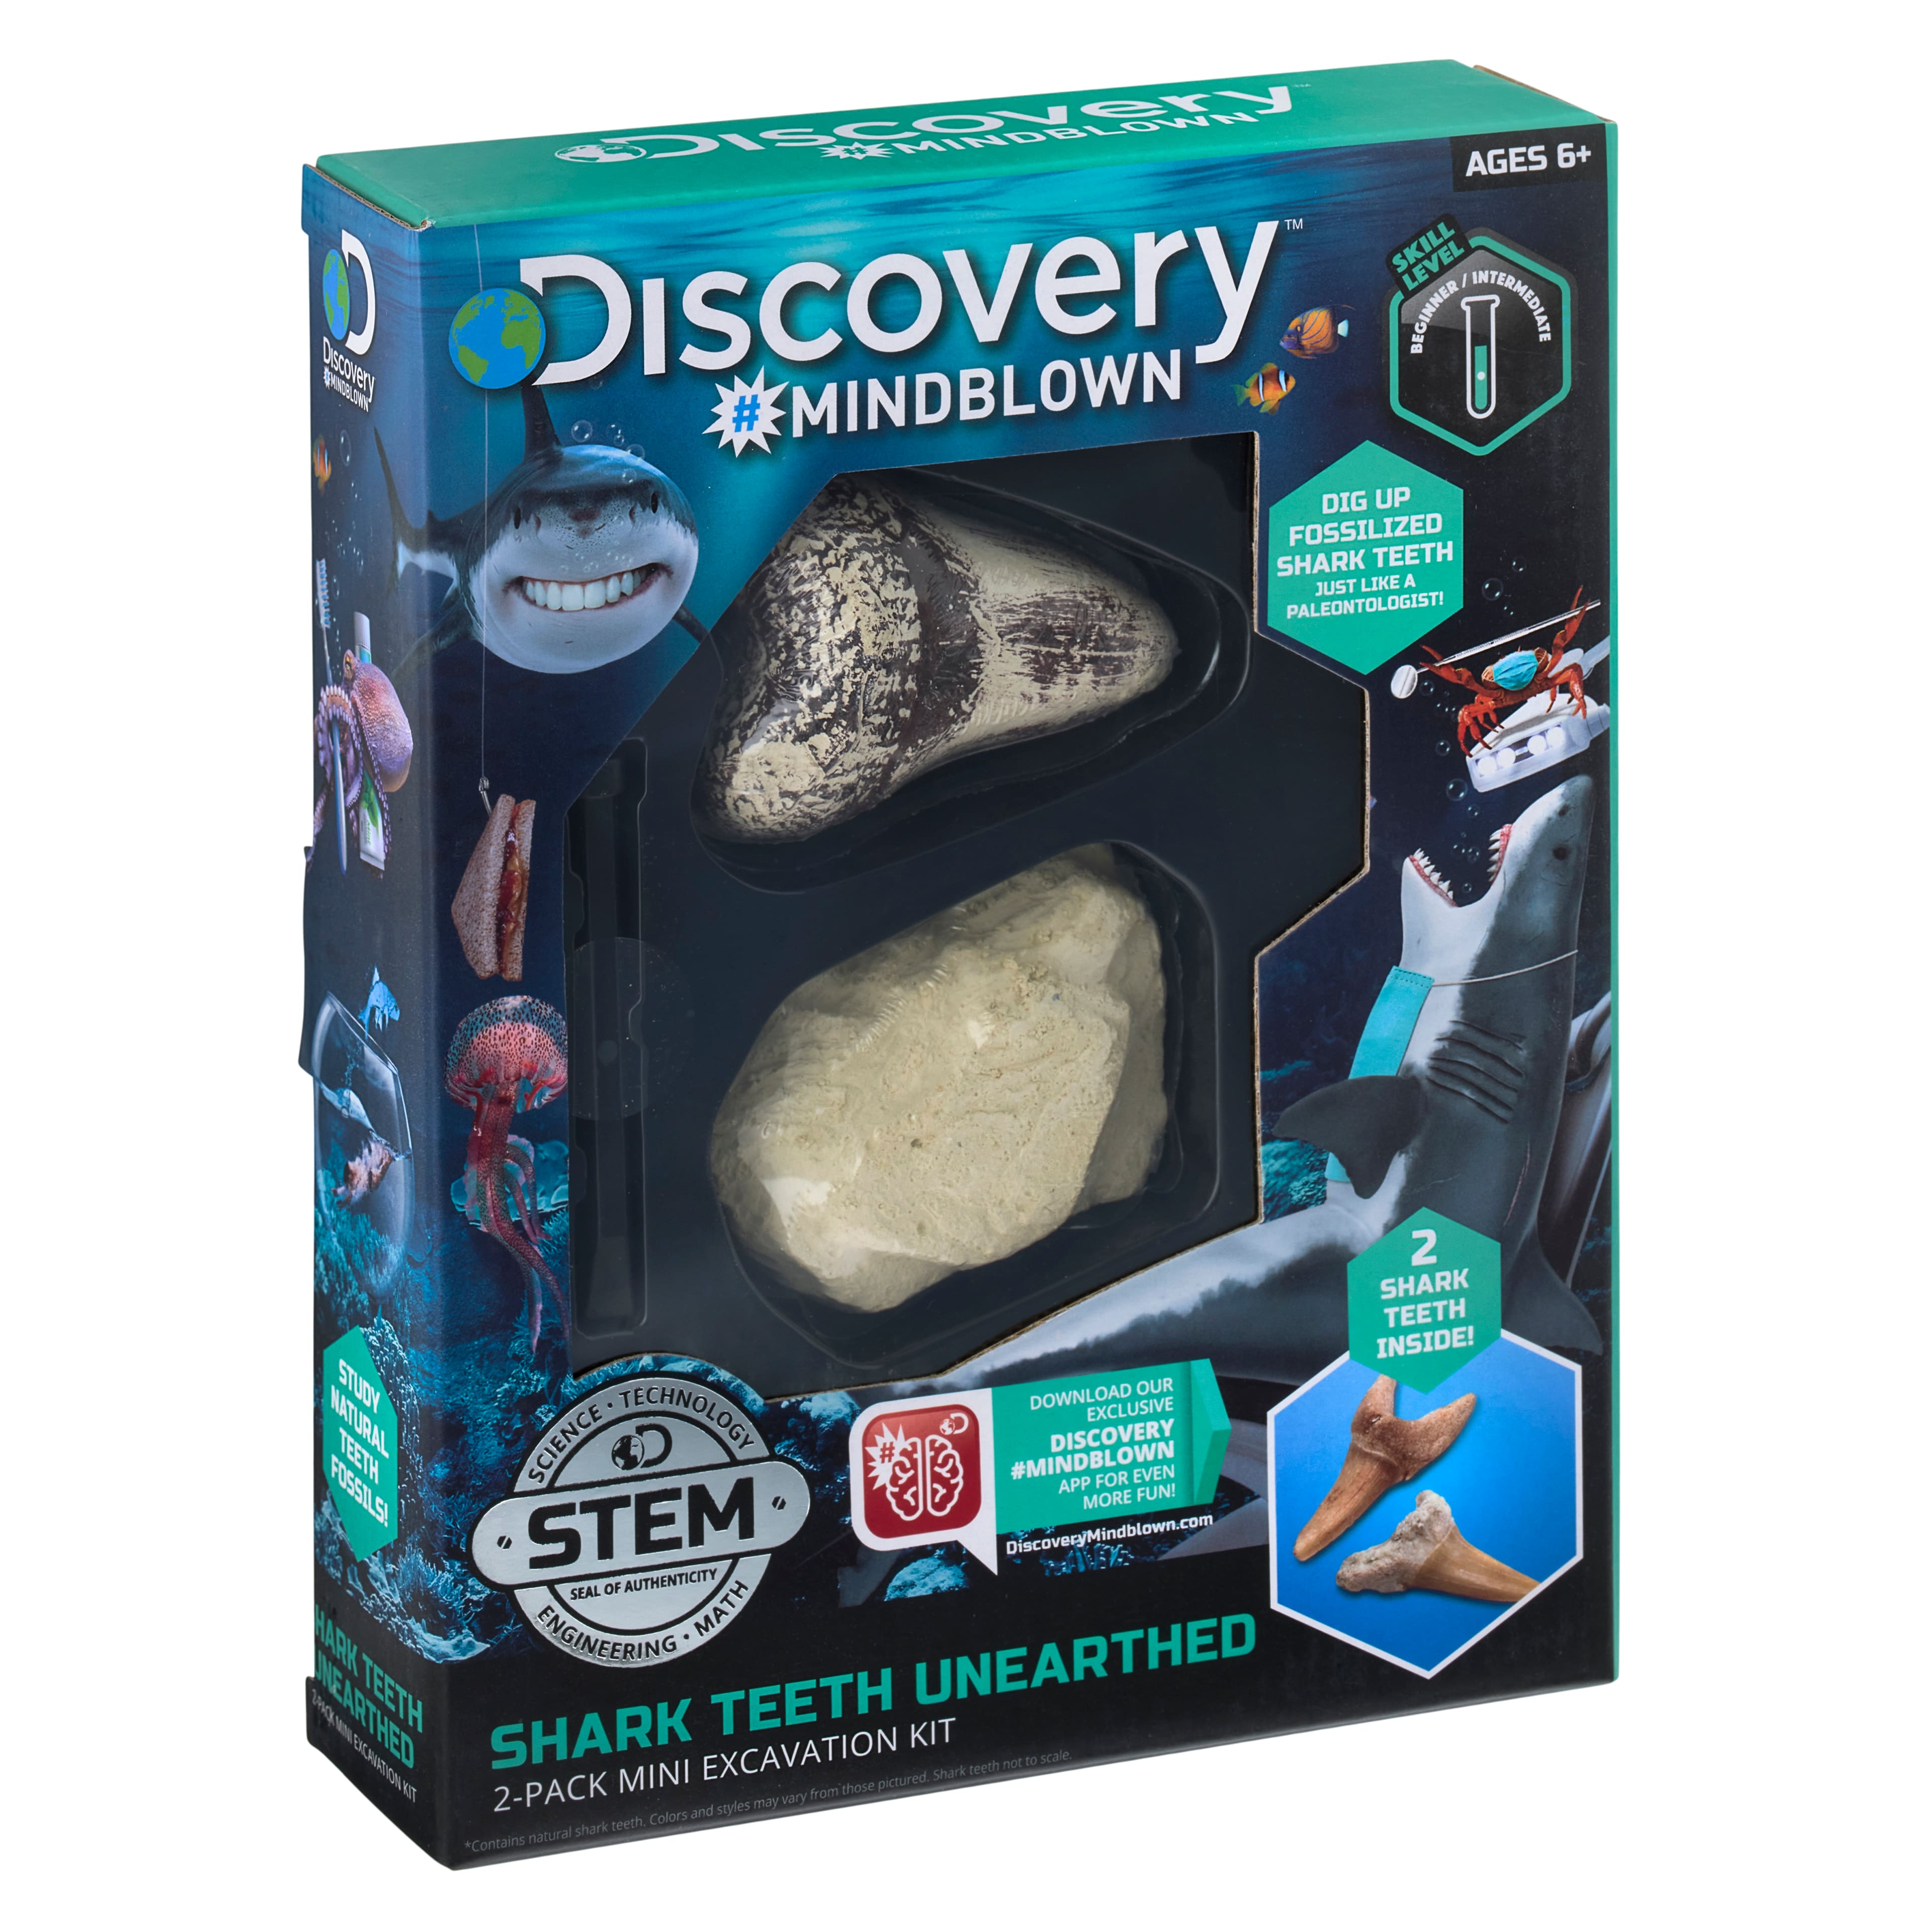 Discovery&#x2122; #Mindblown Shark Teeth Excavation Kit